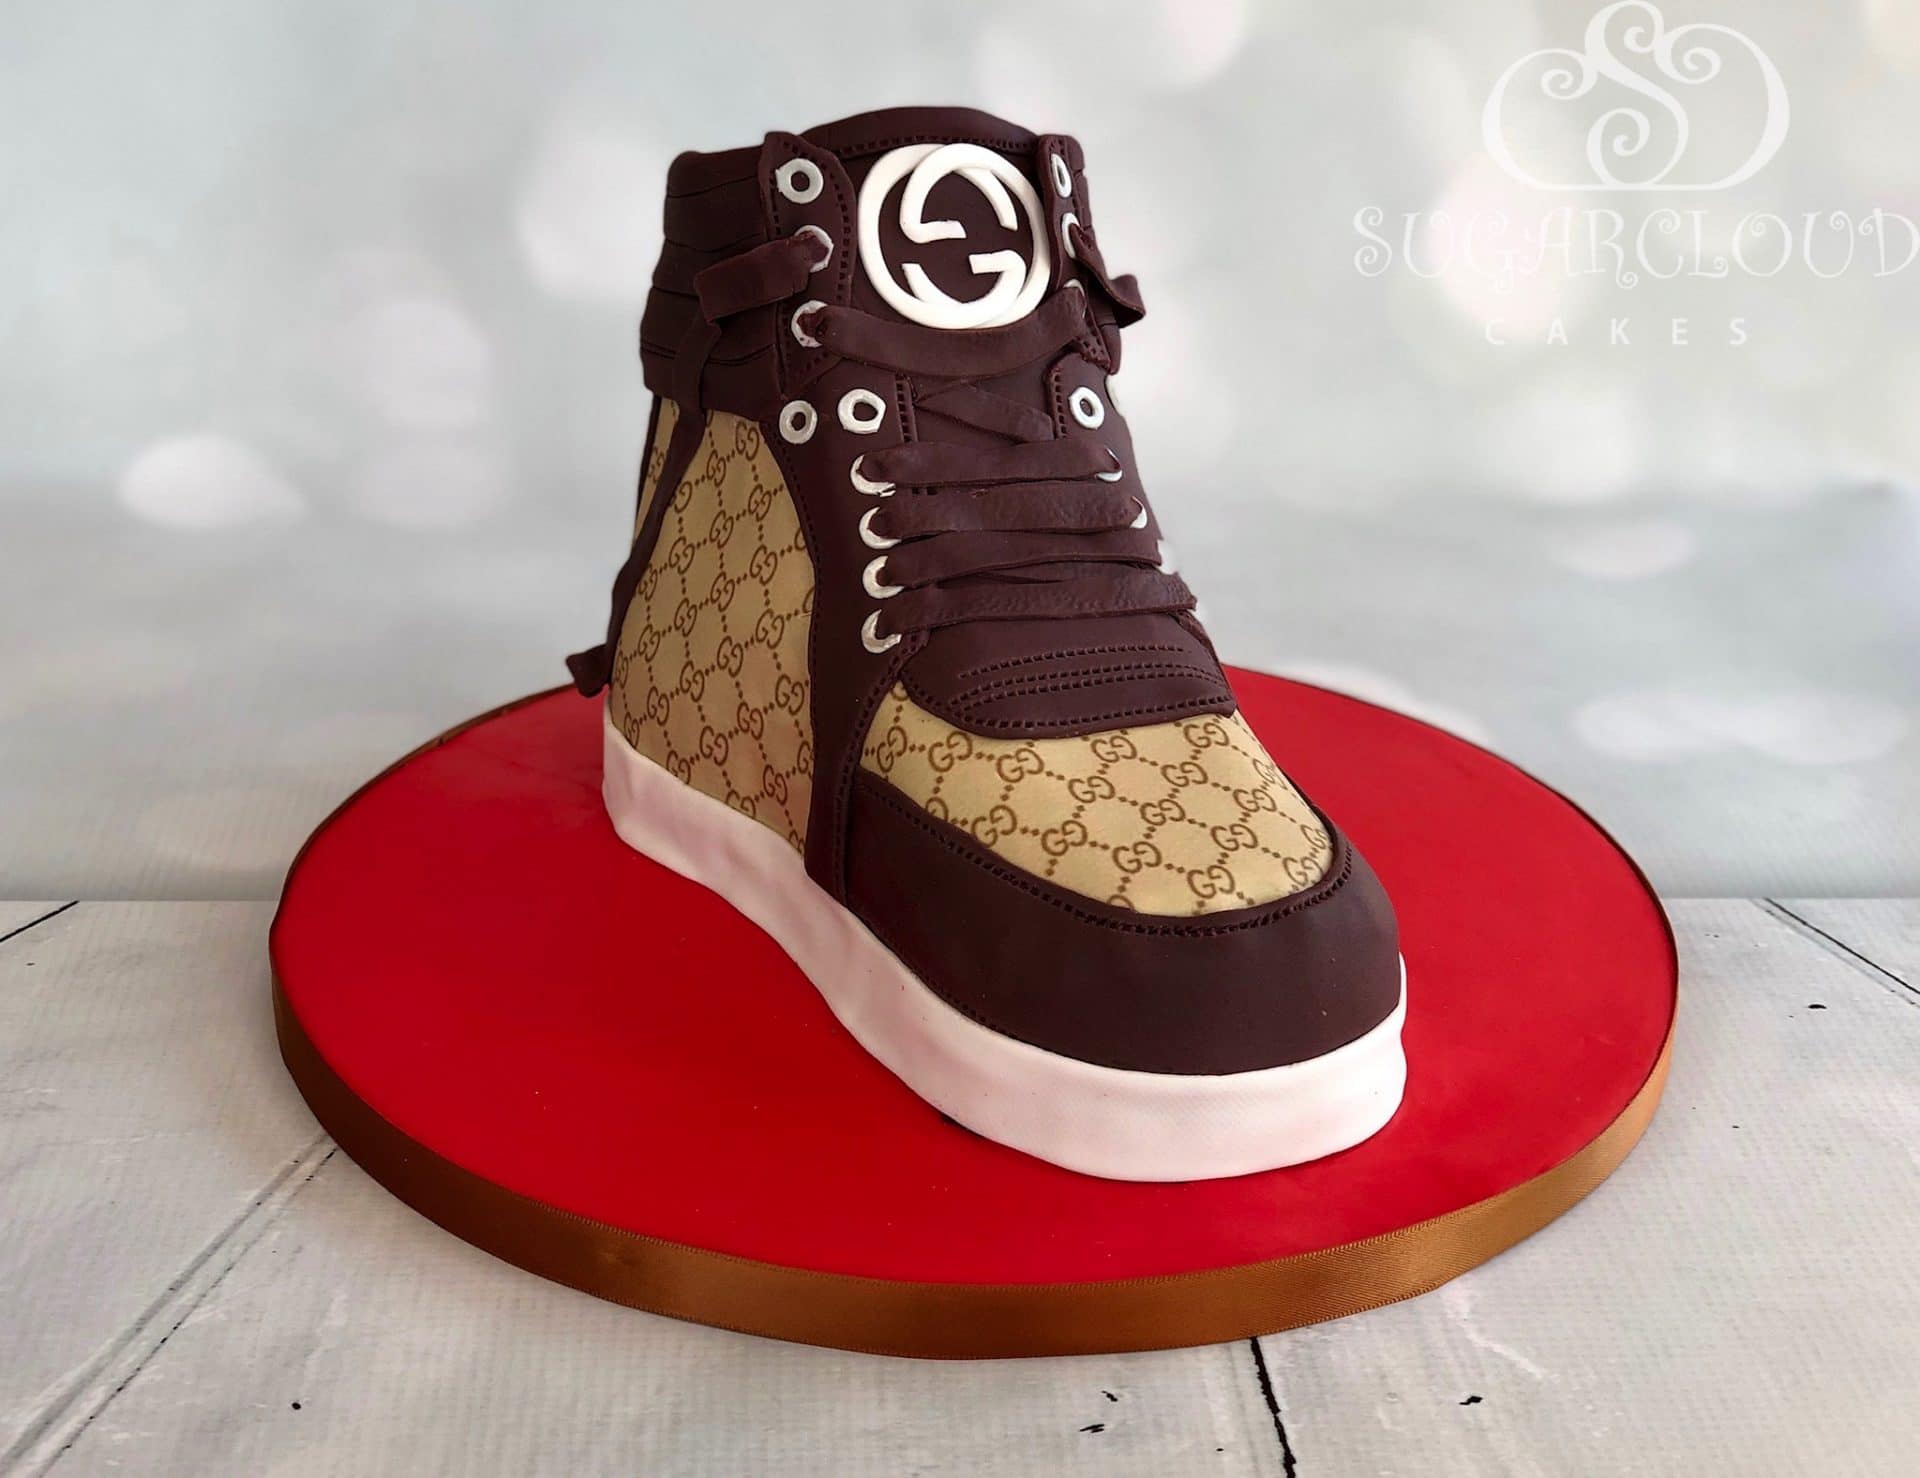 Sugar Cloud Cakes - Cake Designer, Nantwich, Crewe, Cheshire | A Gucci  Inspired Shoe Cake